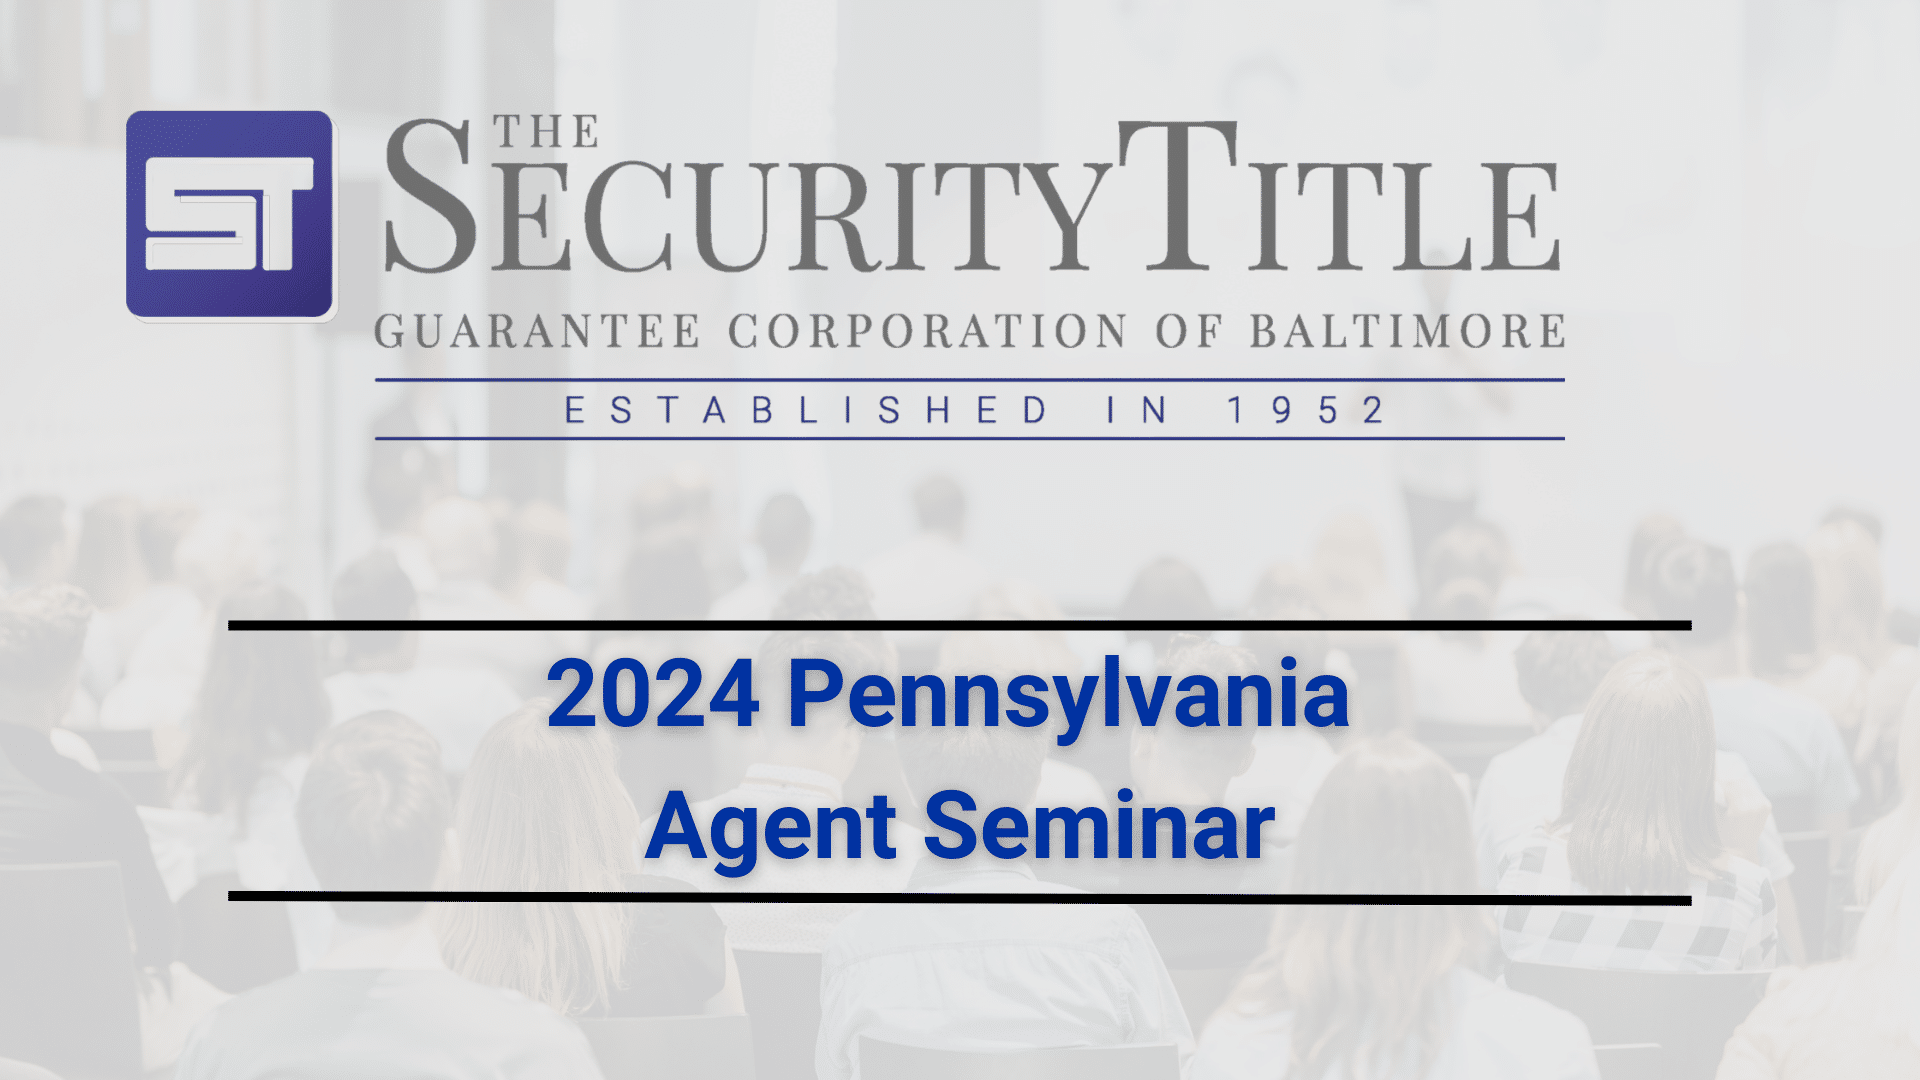 Security Title's 2024 Pennsylvania Agent Seminar